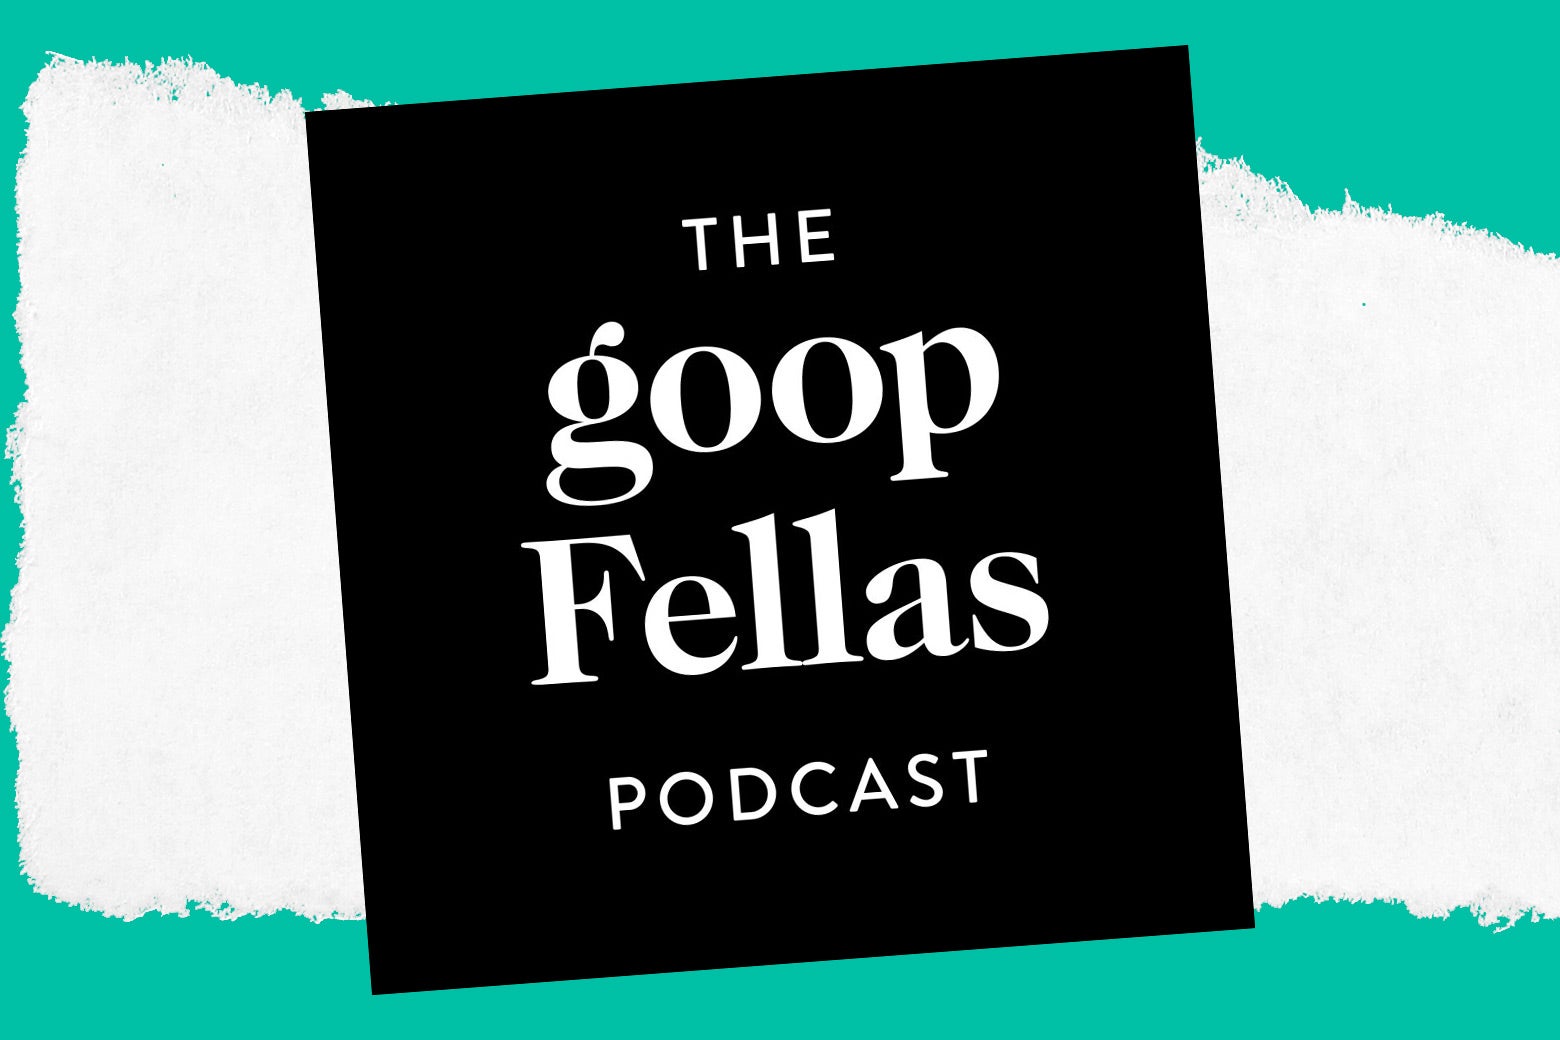 The Goopfellas podcast logo.